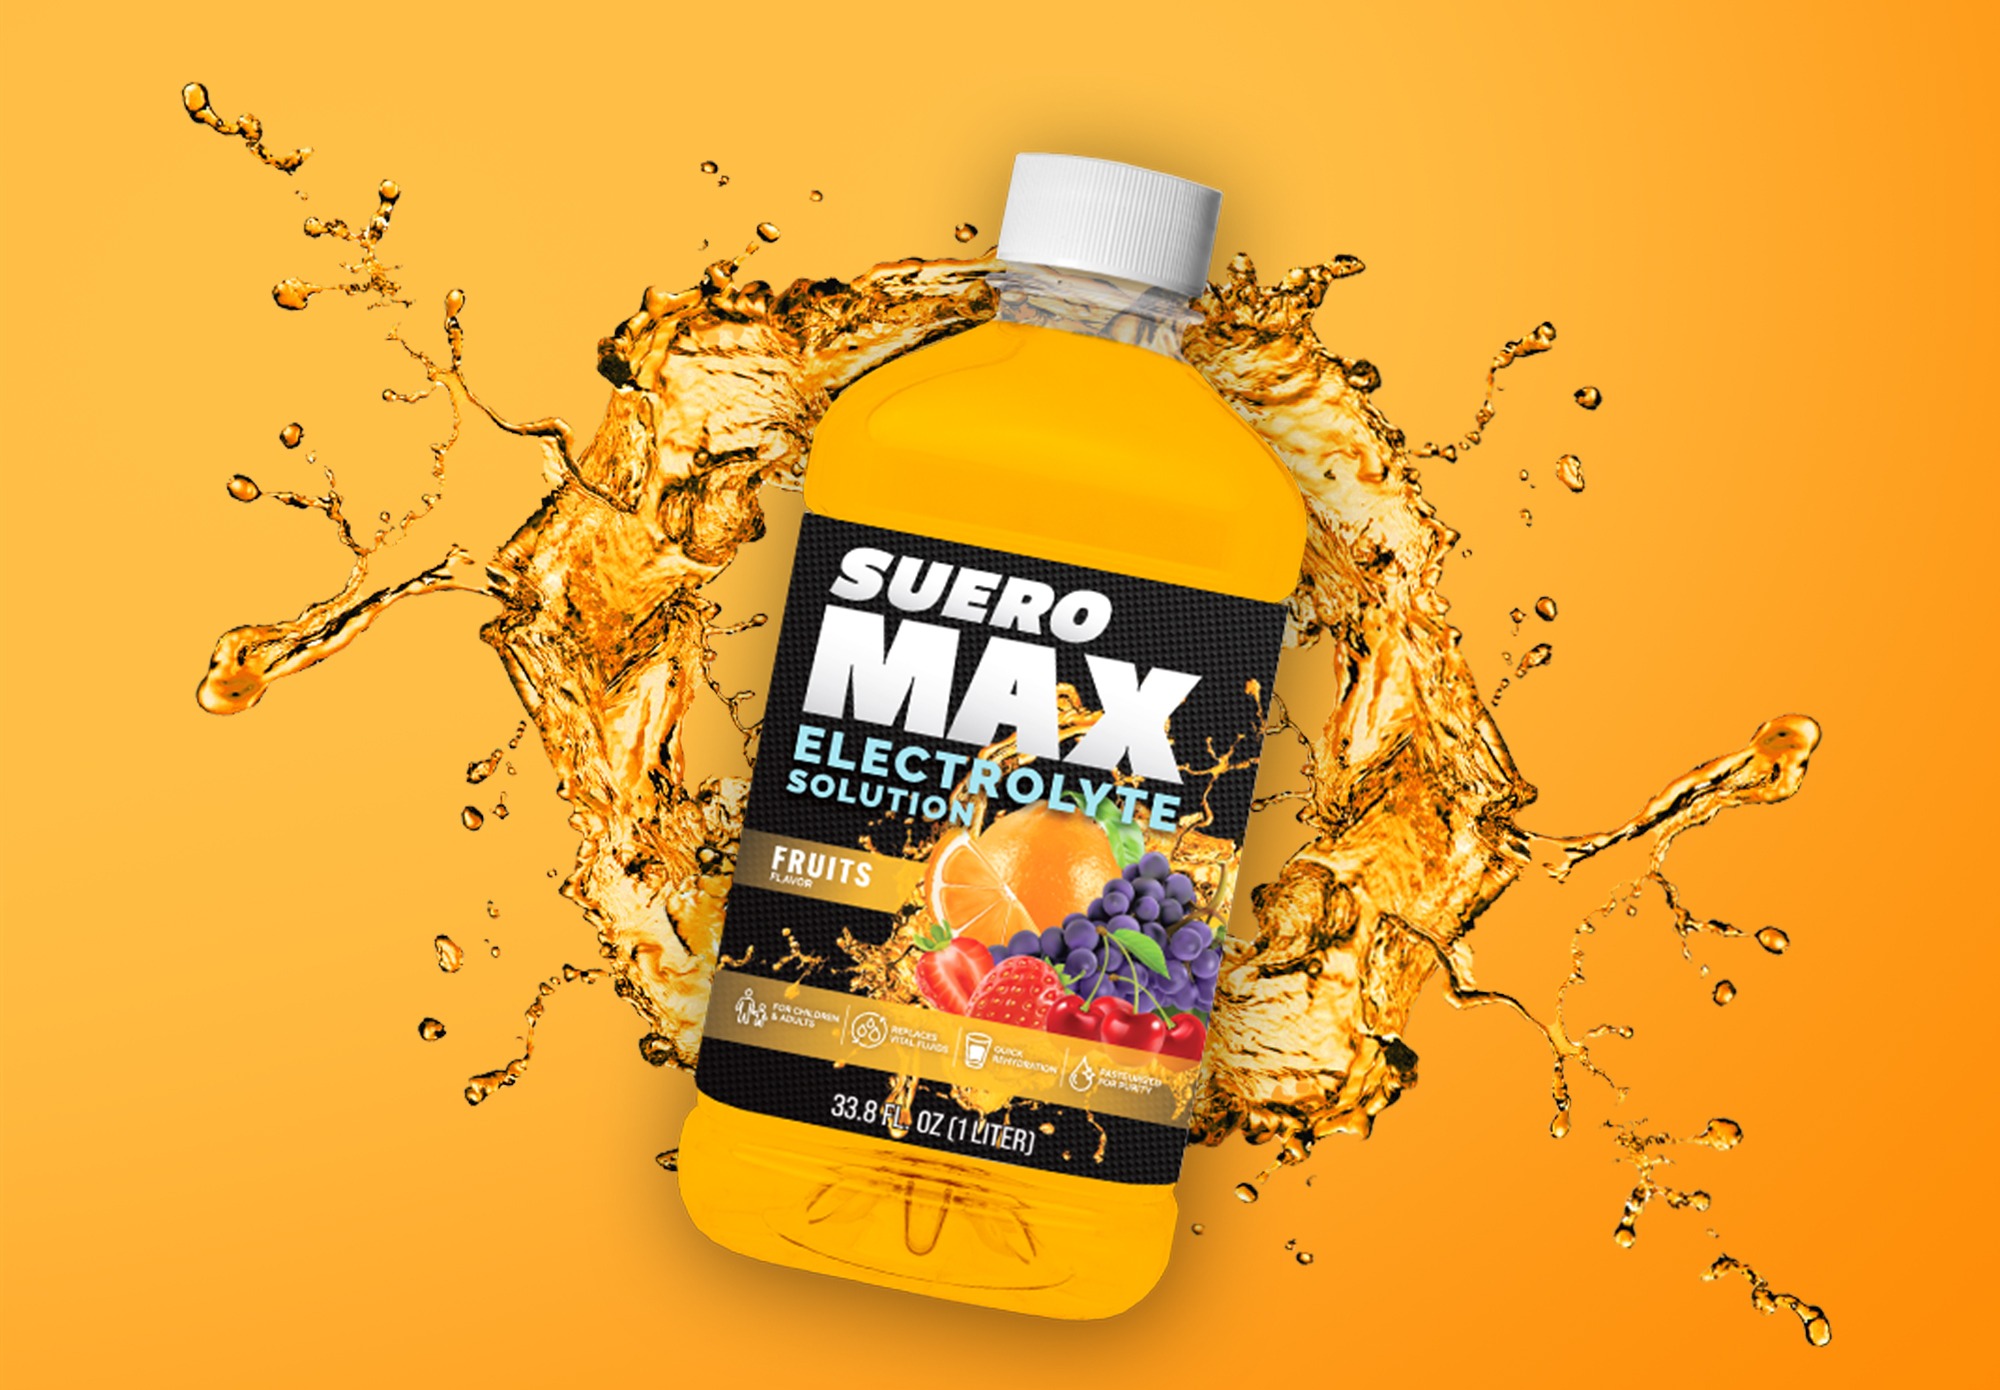 Suero Max Fruit Flavor Packaging Design by Octane Advertising Design.